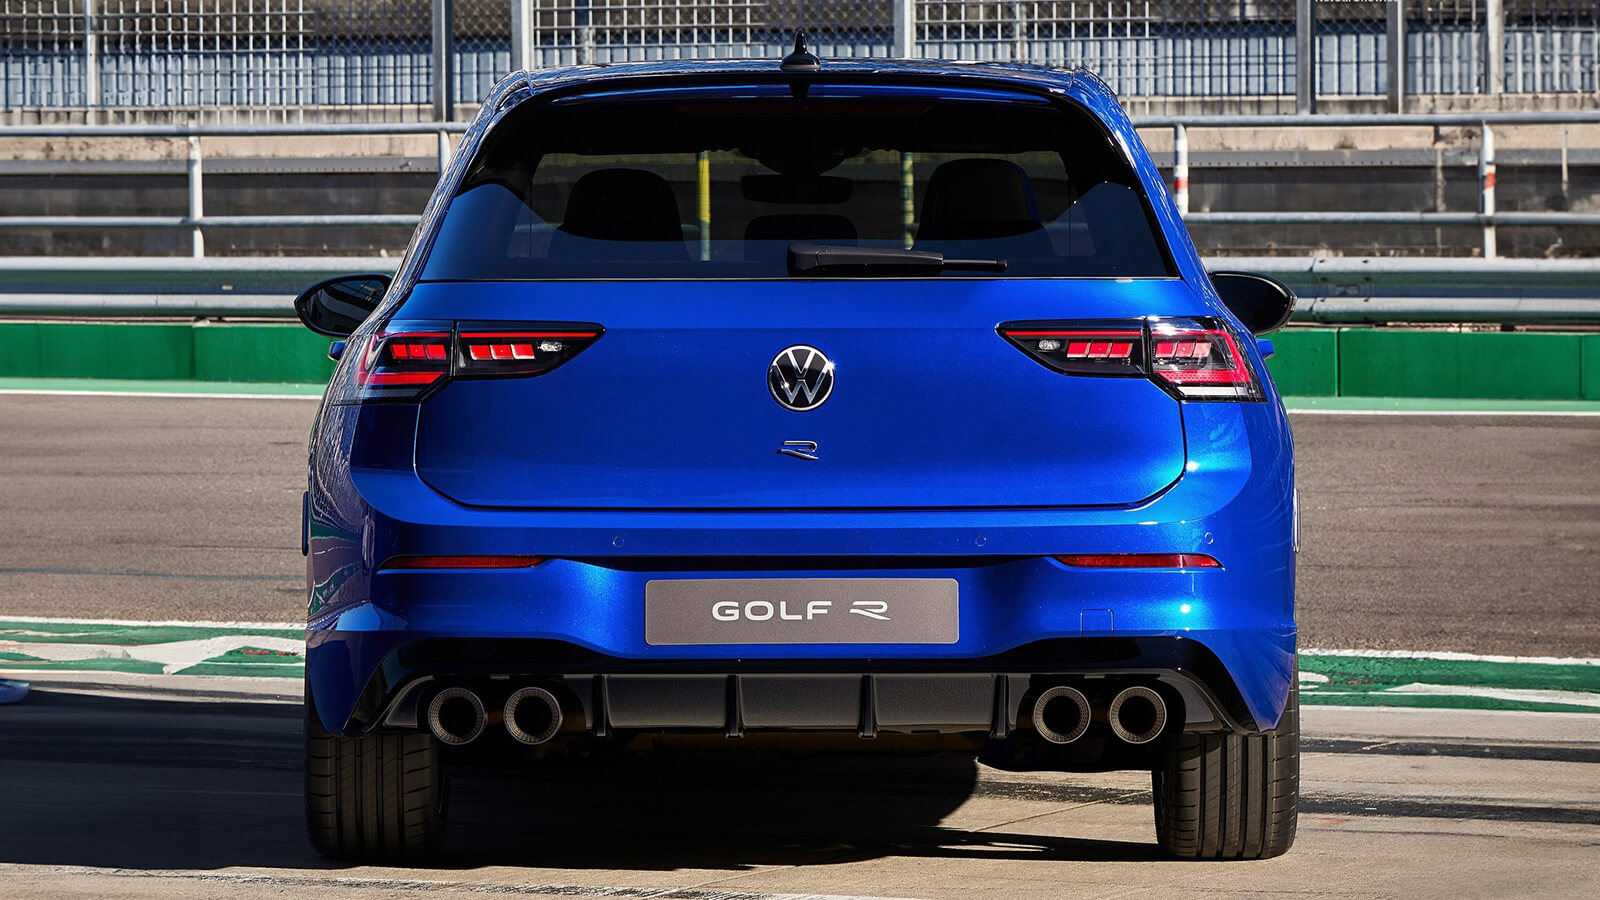  Volkswagen Golf R